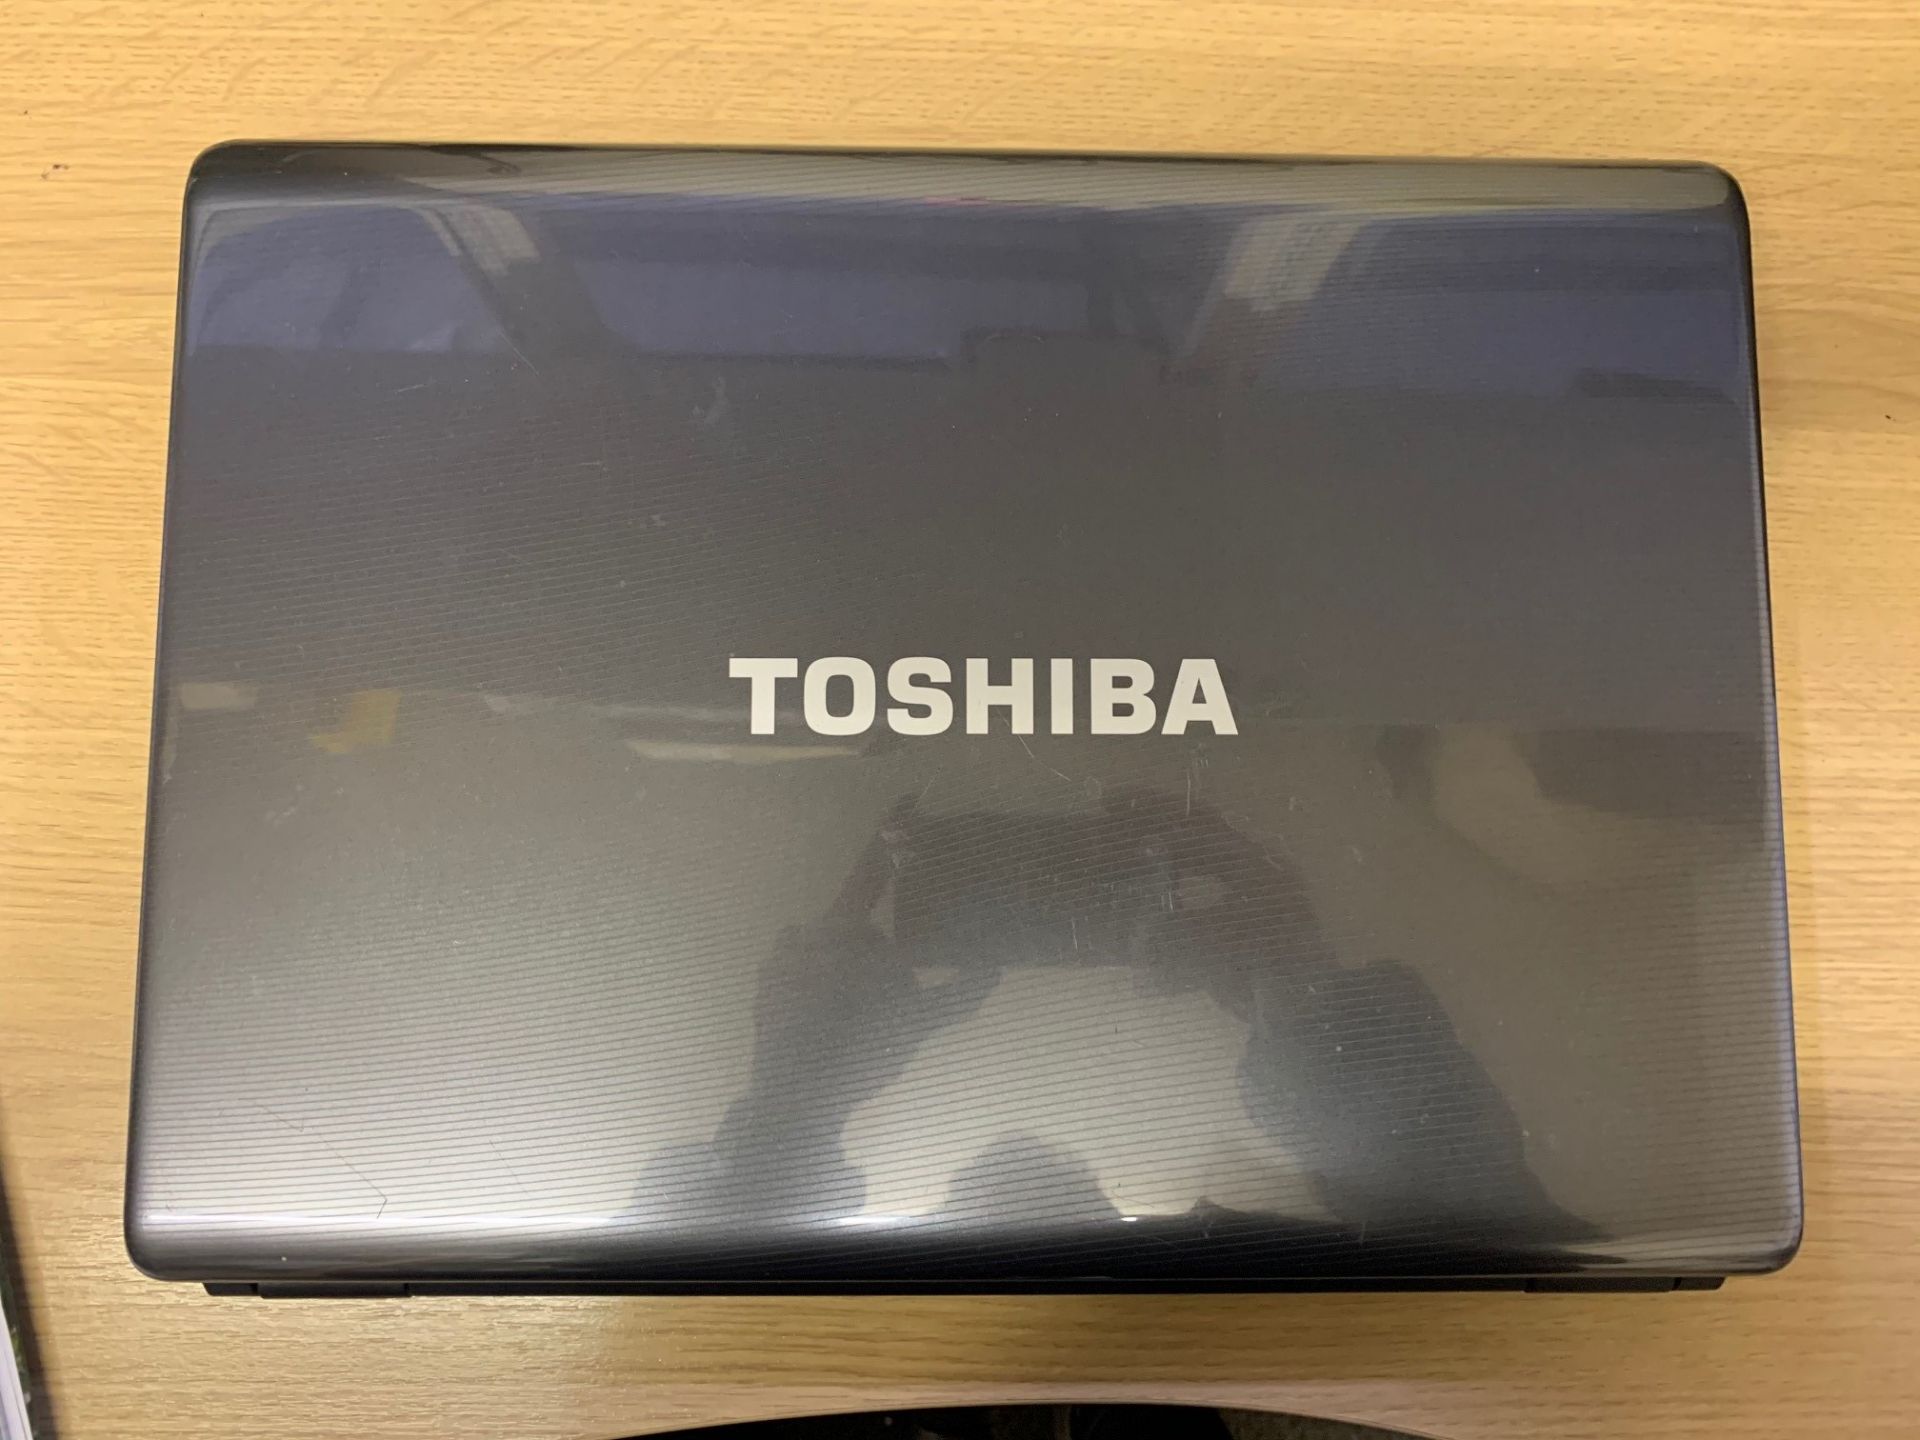 Toshiba L350-21T Laptop - 320GB Hard Drive, 3GB RAM, 17" Screen, Windows 7 & Charger - Image 3 of 4